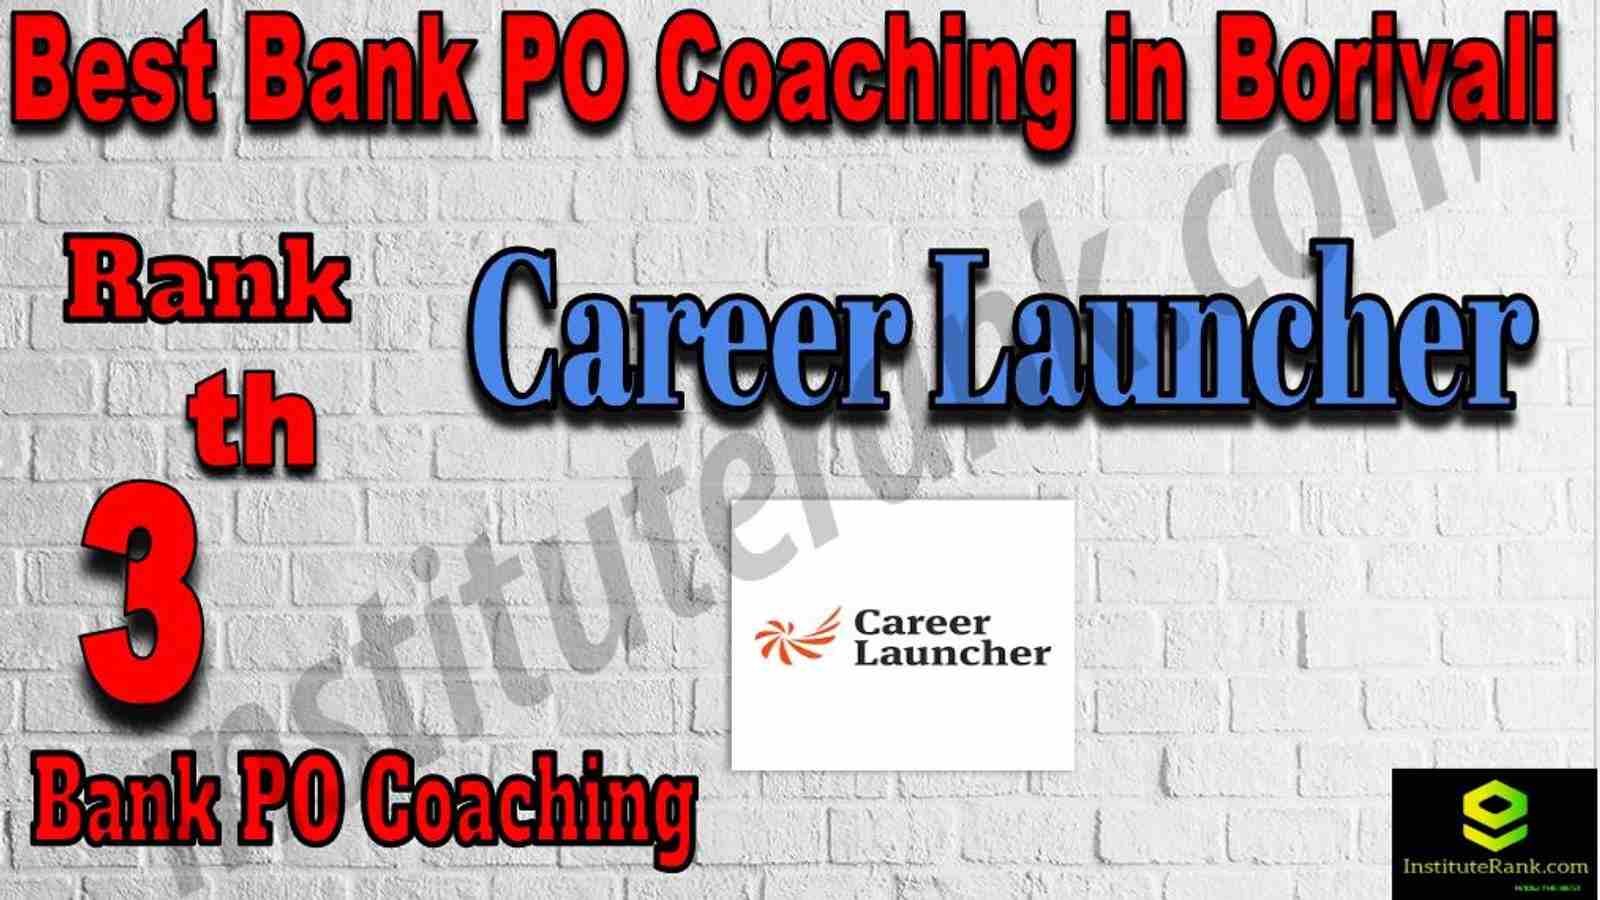 3rd Best Bank PO Coaching in Borivali